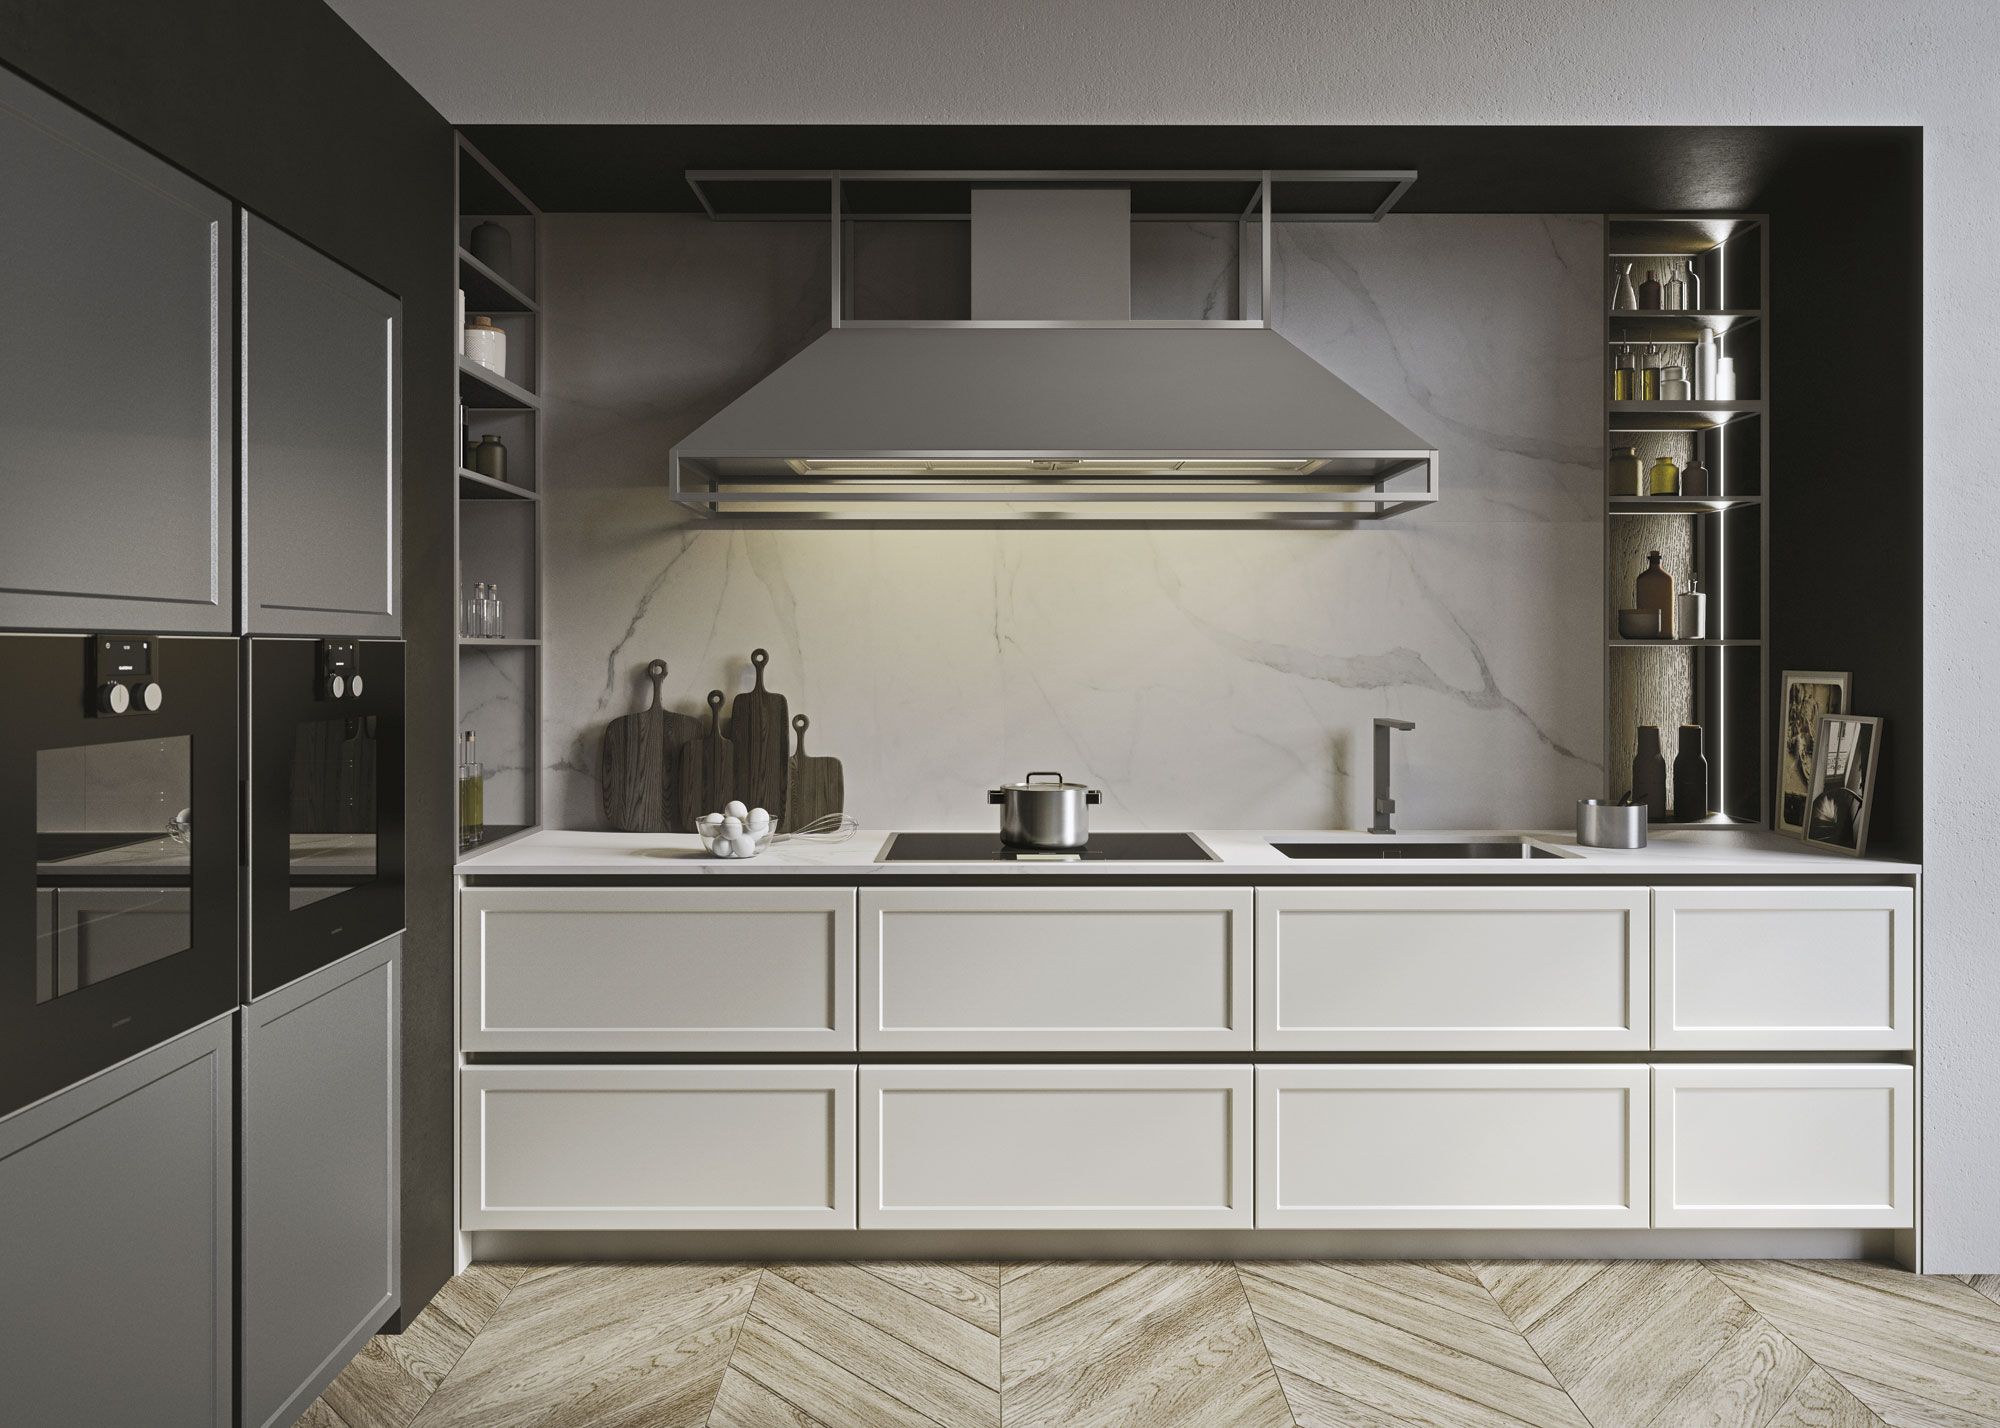 Foto: Italiaanse design keuken cucine moderne frame snaidero Tieleman Keukens 6